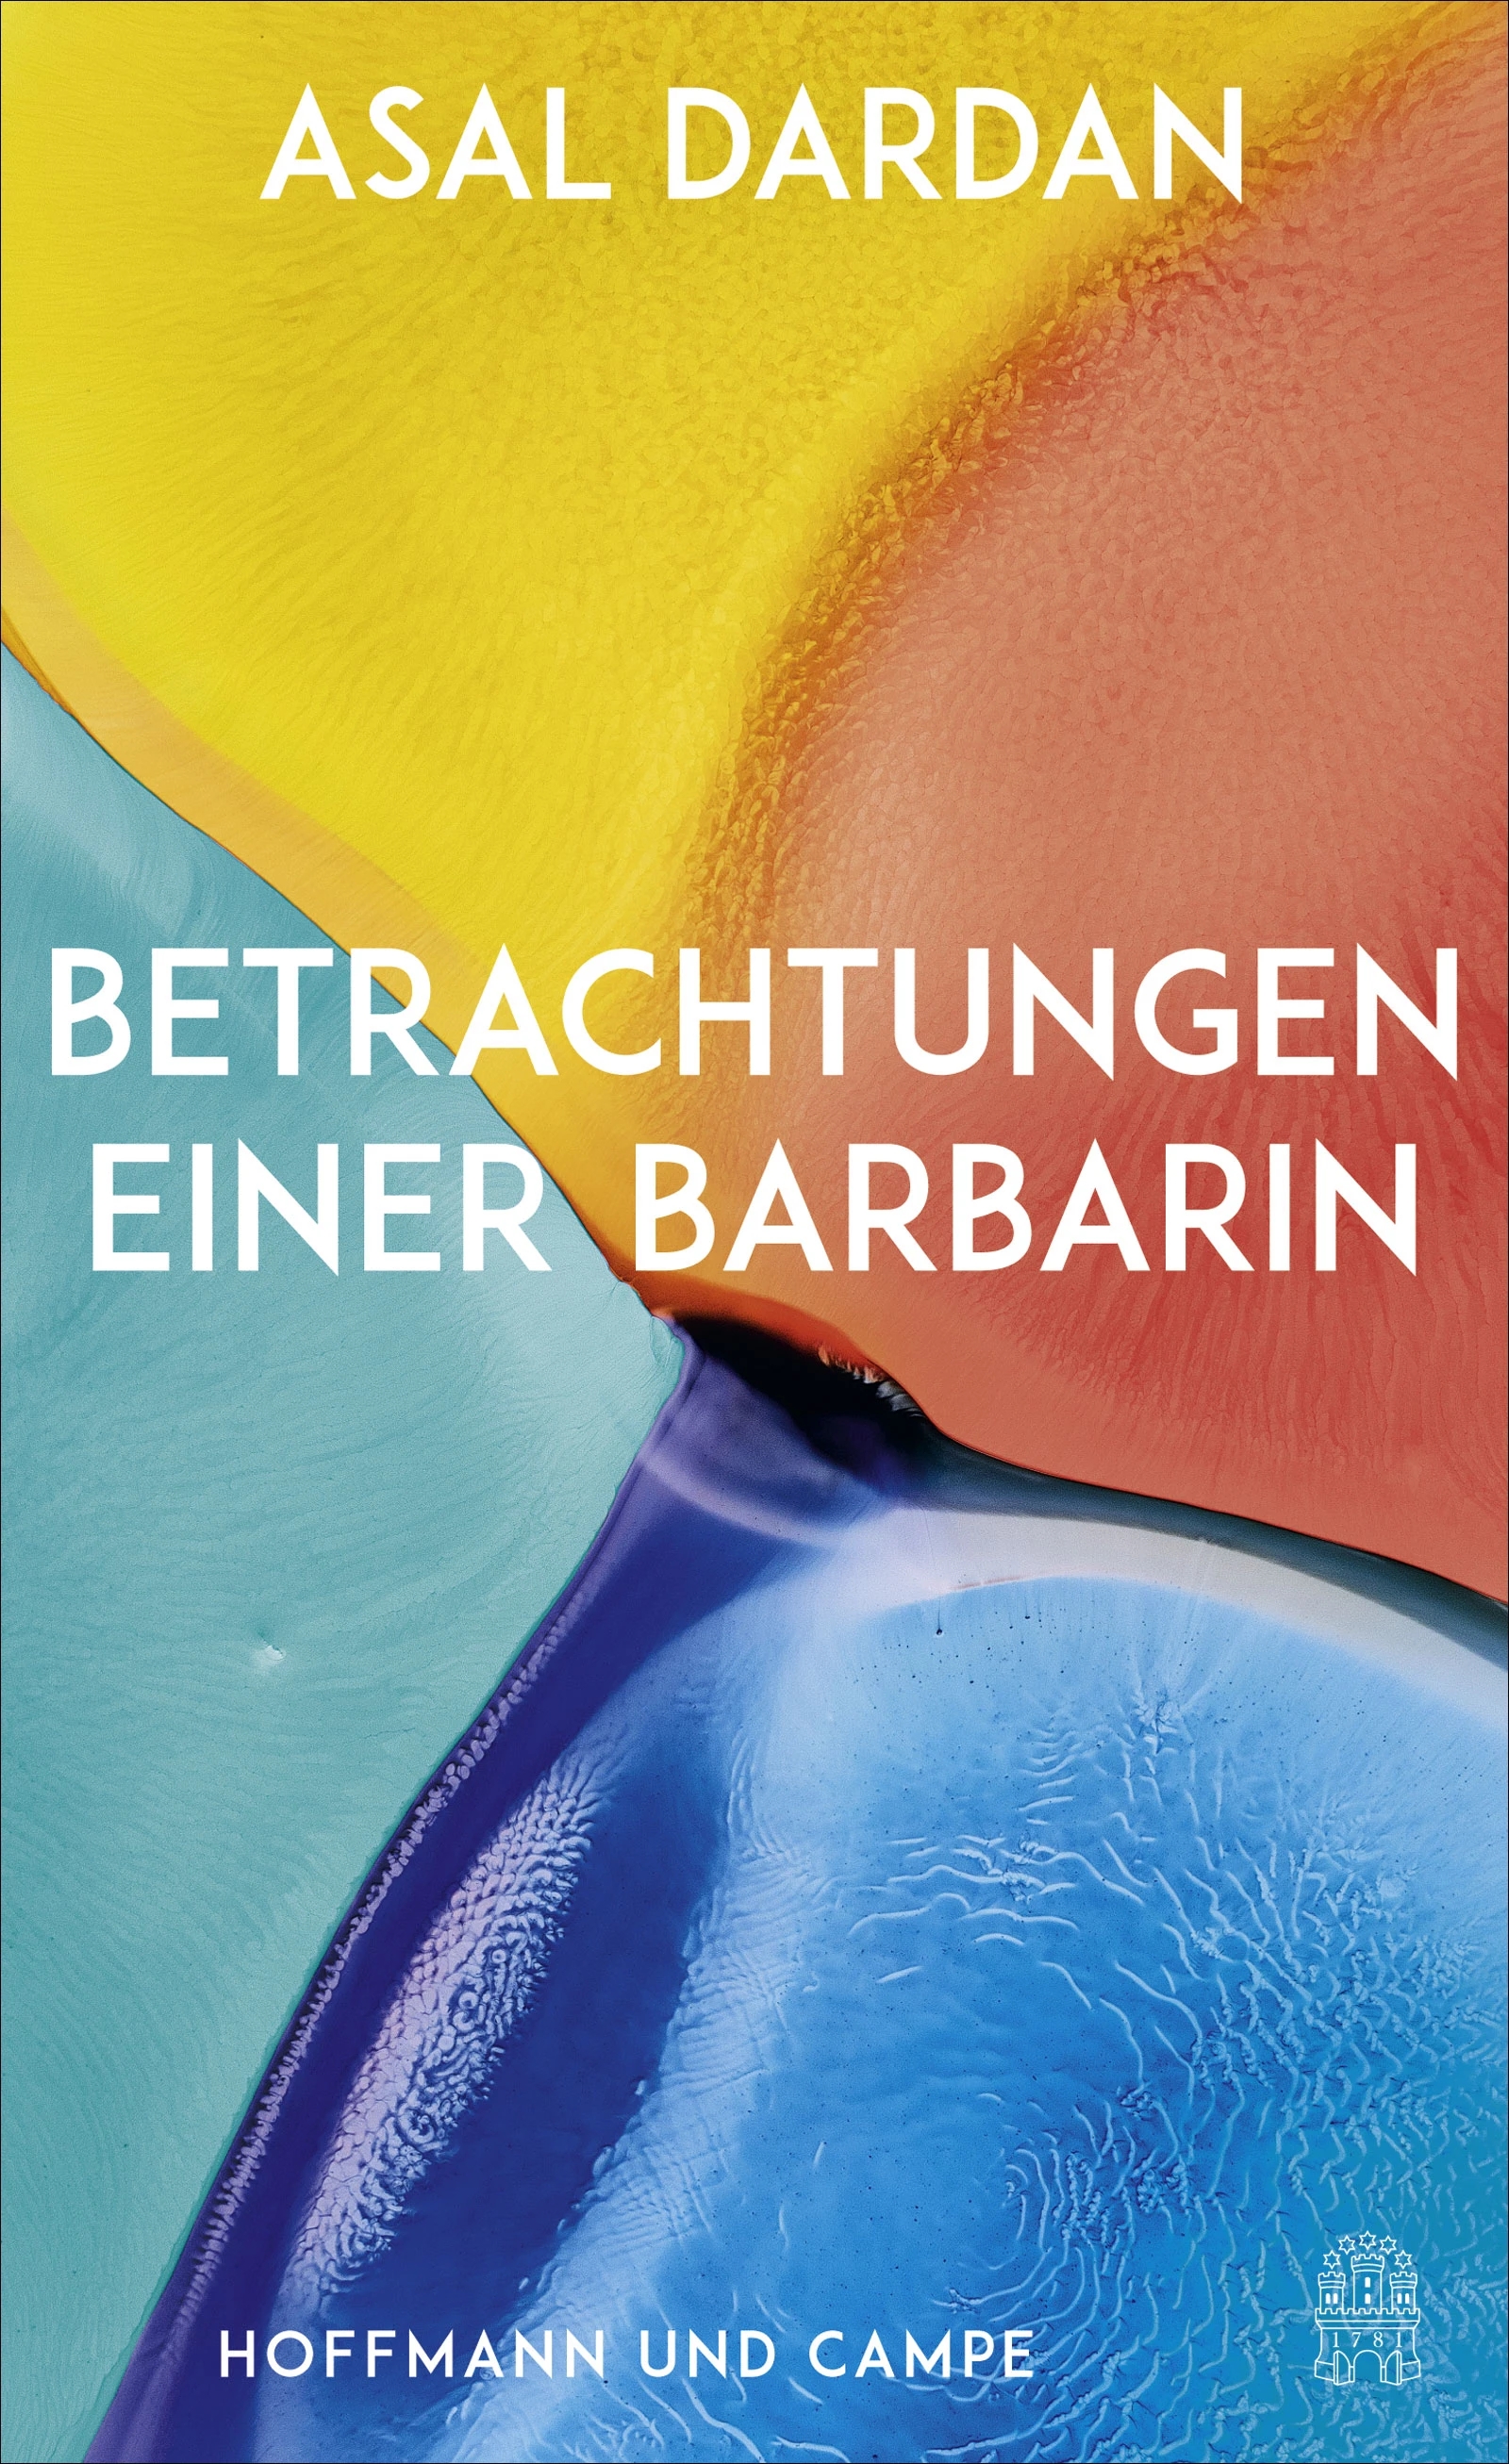 Asal Dardan, Betrachtungen einer Barbarin, book cover